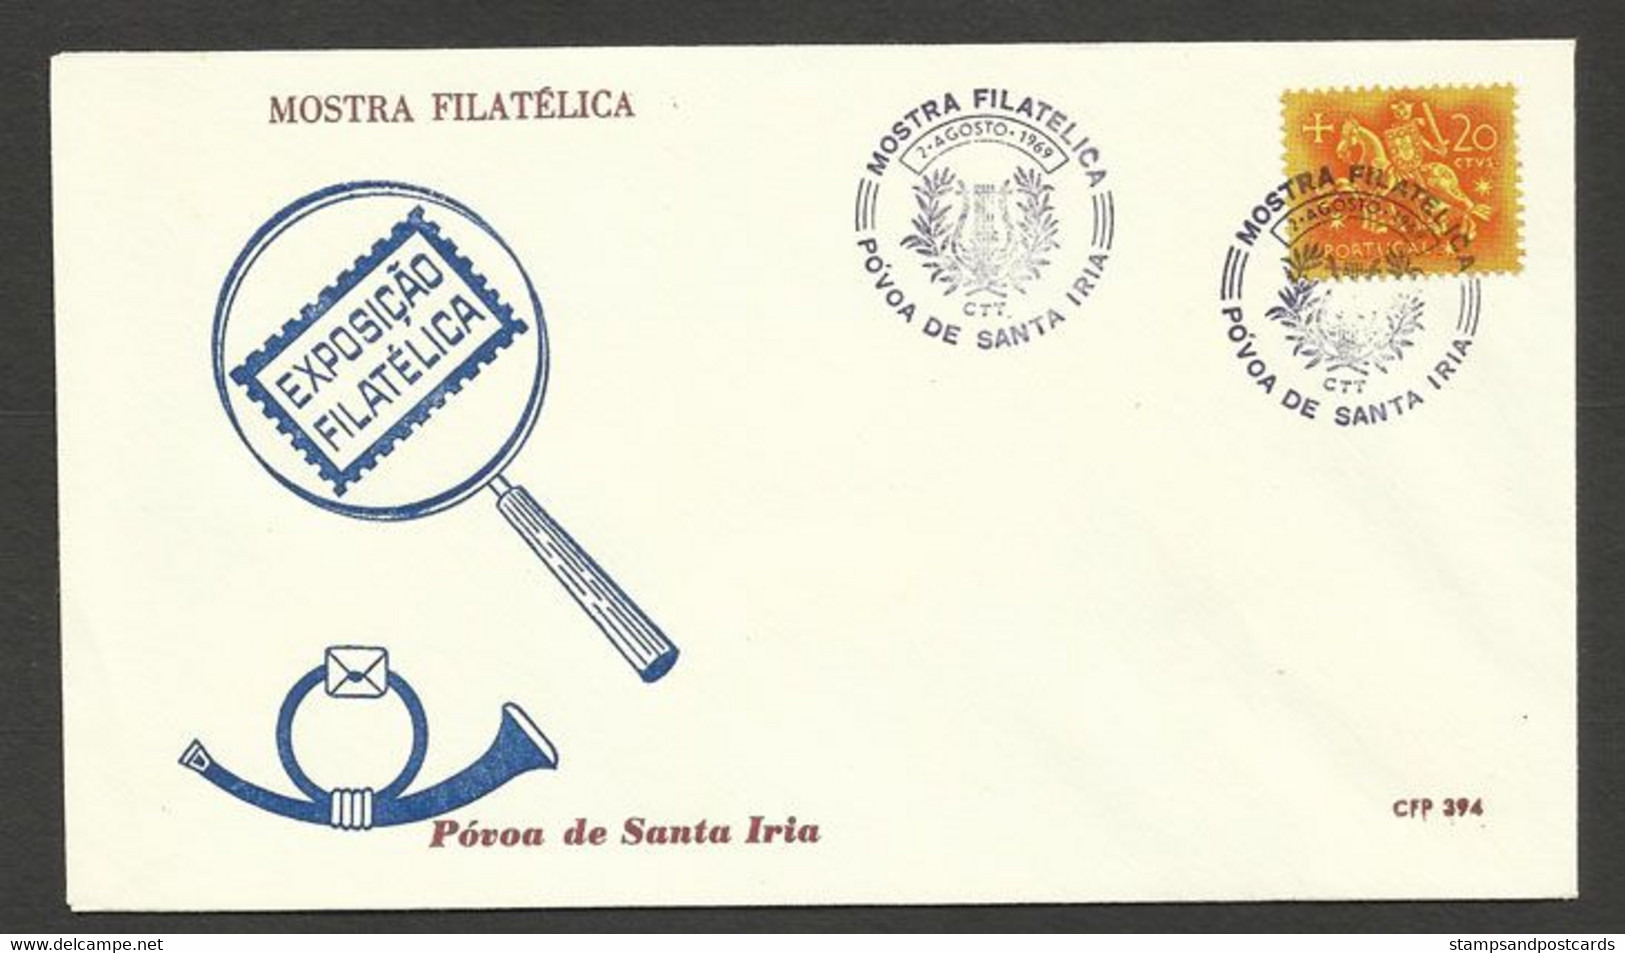 Portugal Cachet Commémoratif  Expo Philatelique Póvoa De Santa Iria Musique 1969 Event Postmark Philatelic Expo Music - Postal Logo & Postmarks